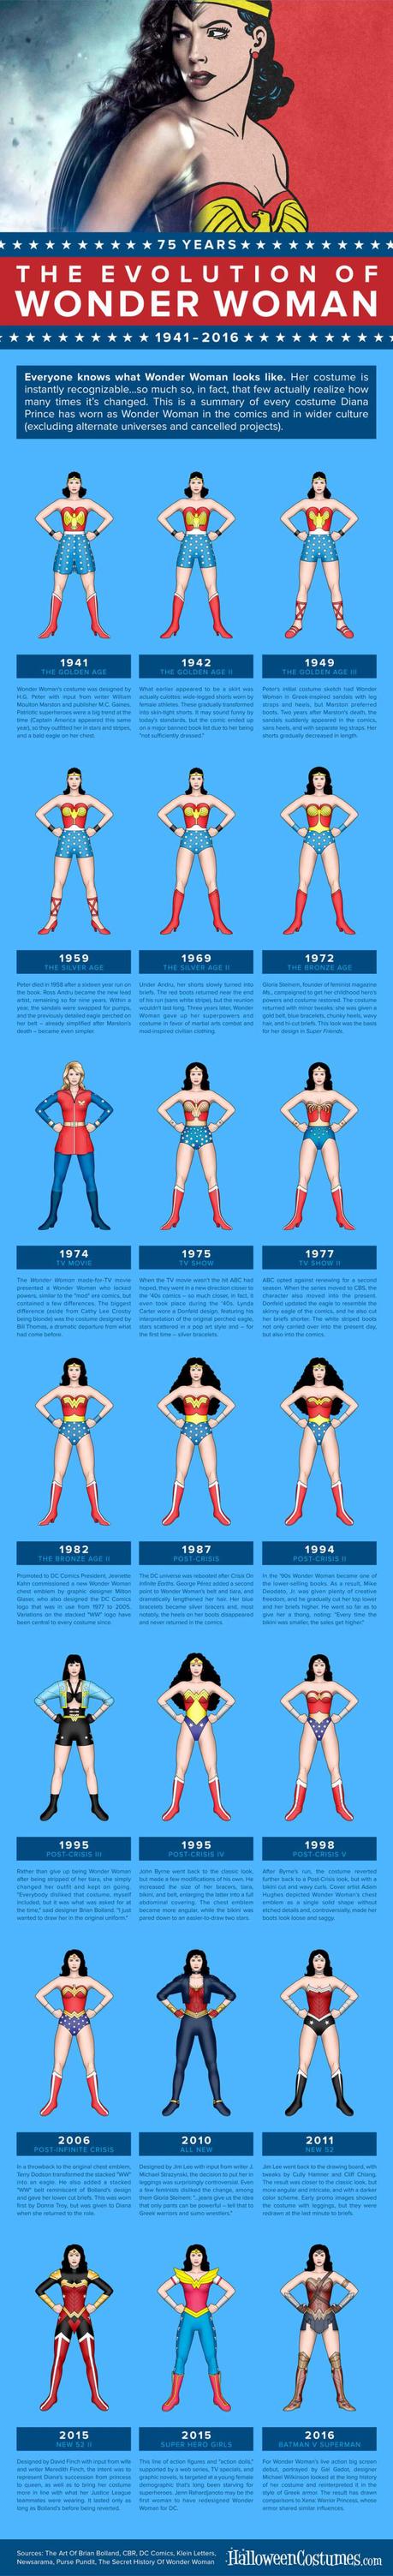 Wonder Woman Should/Should Not Wear Pants – A Costume Evolution Infographic